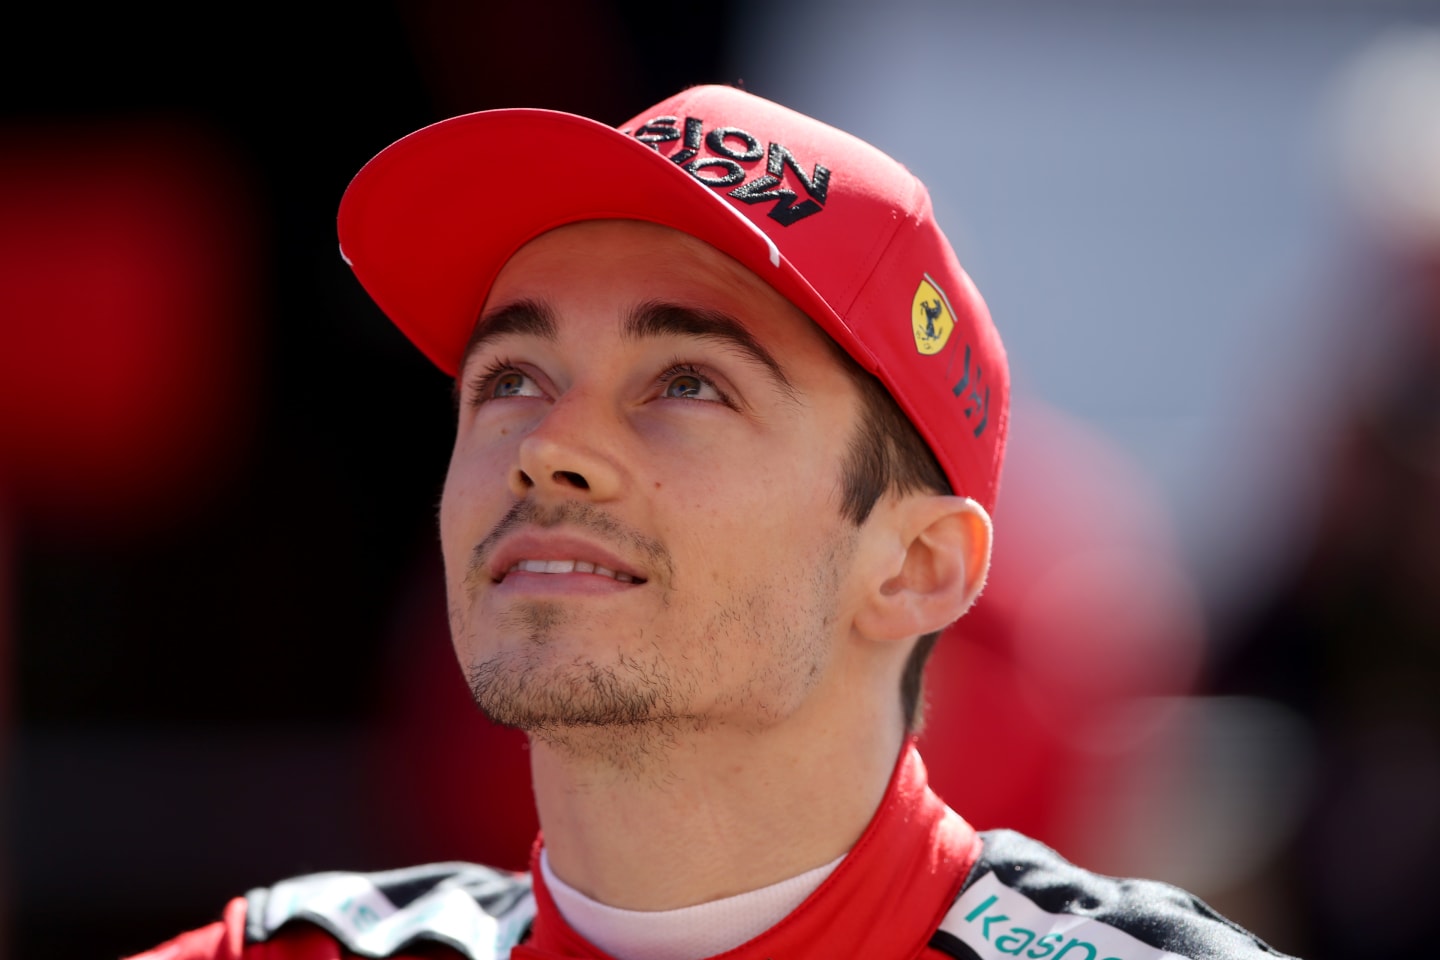 BARCELONA, SPAIN - FEBRUARY 20: Charles Leclerc of Monaco and Ferrari looks on in the Pitlane